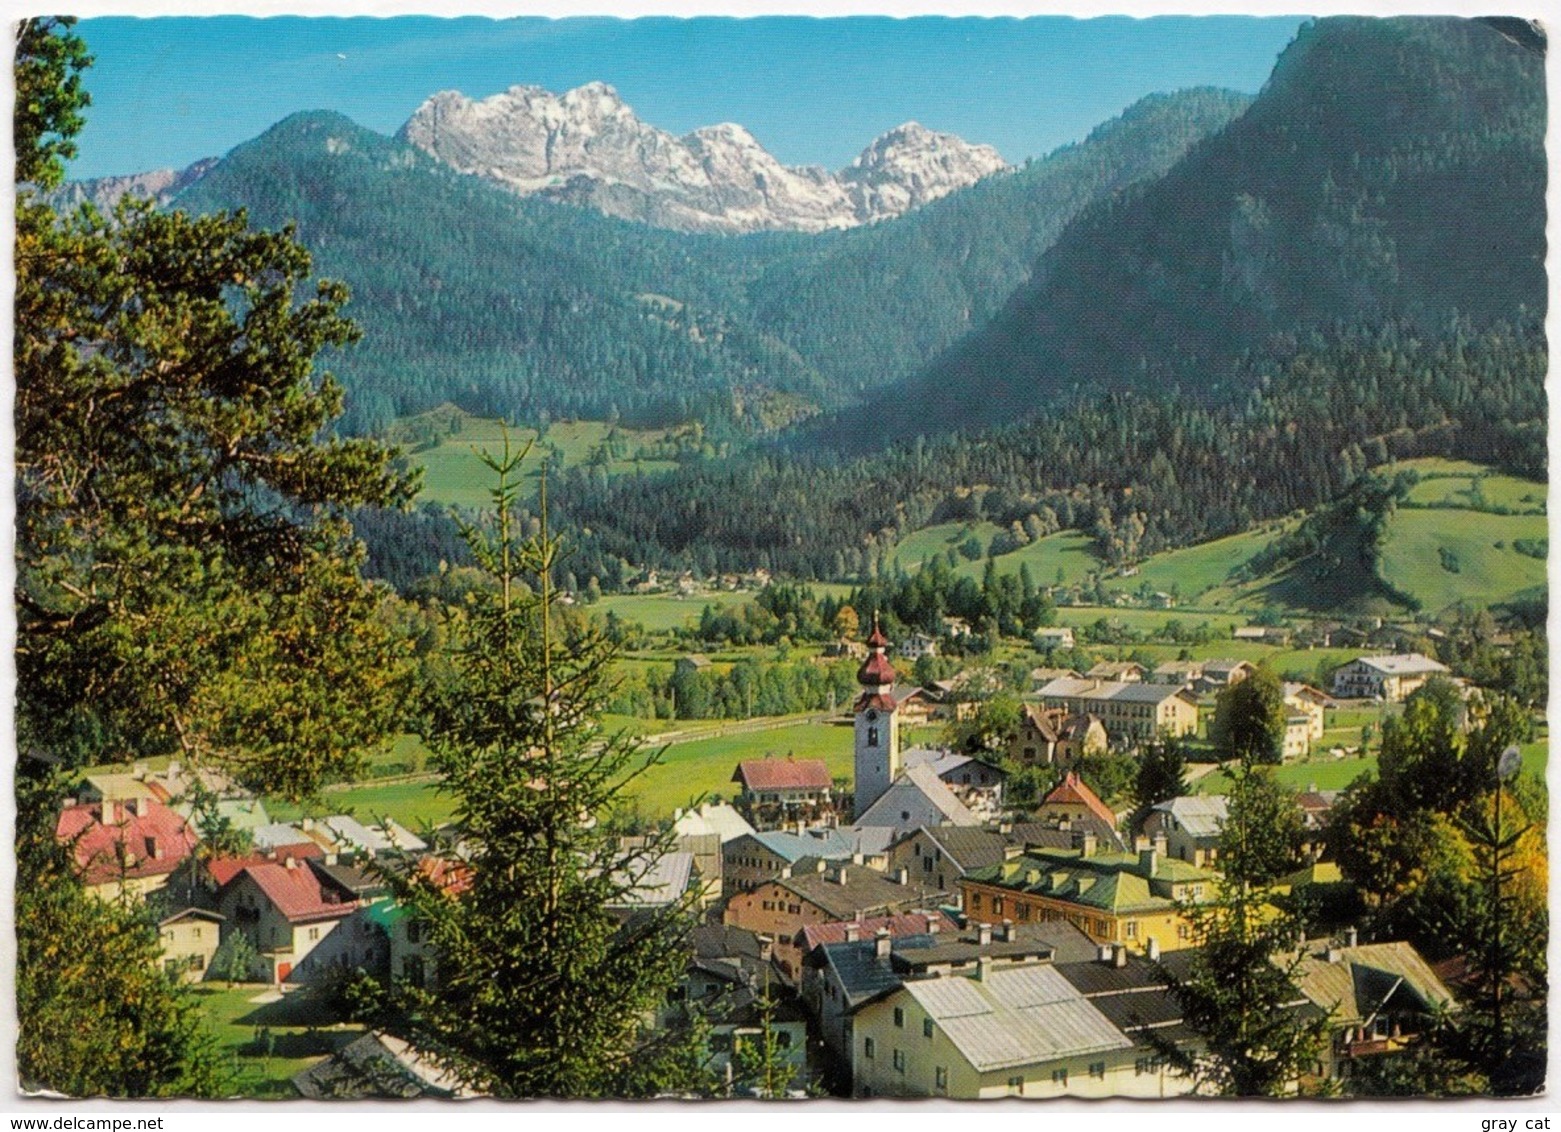 Hohenluftkurort Lofer Mit Reiteralp-Gebirge, Austria, 1970 Used Postcard [23483] - Lofer